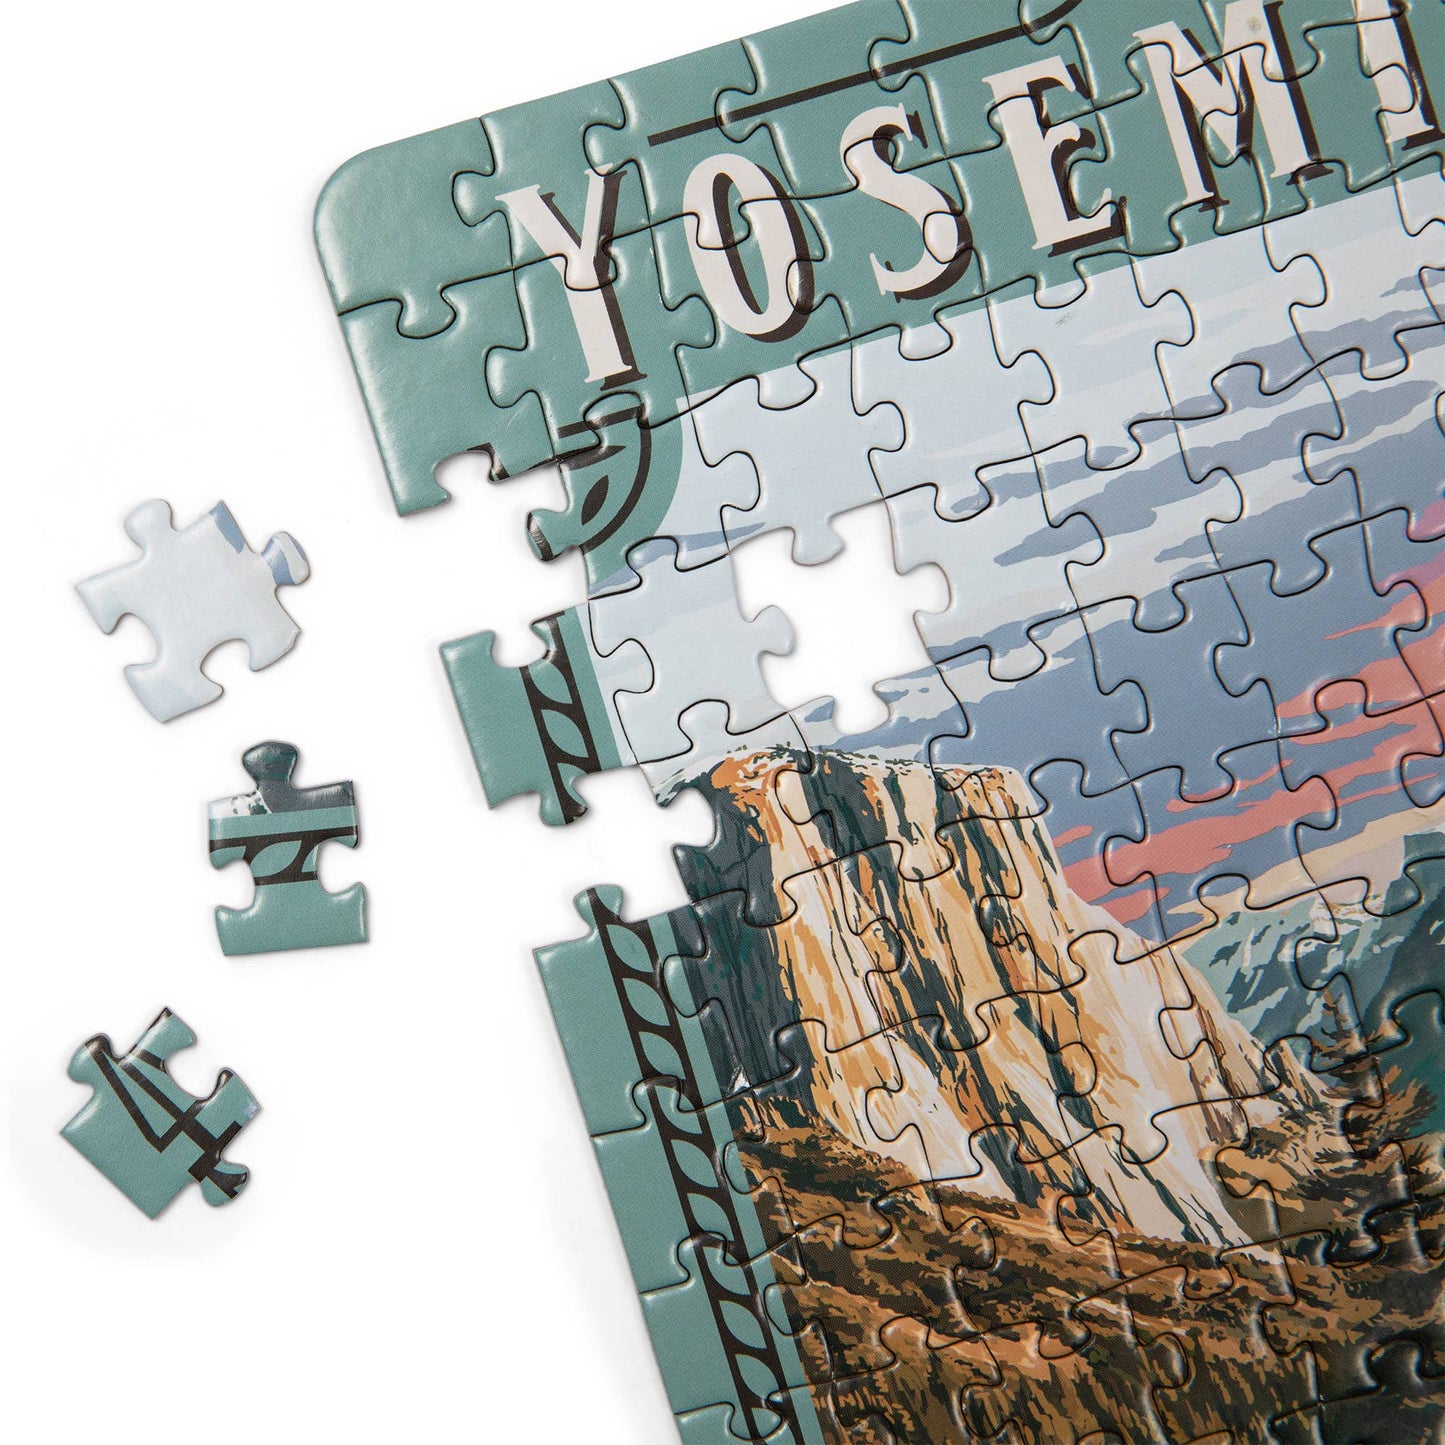 Yosemite National Parks Mini Puzzle